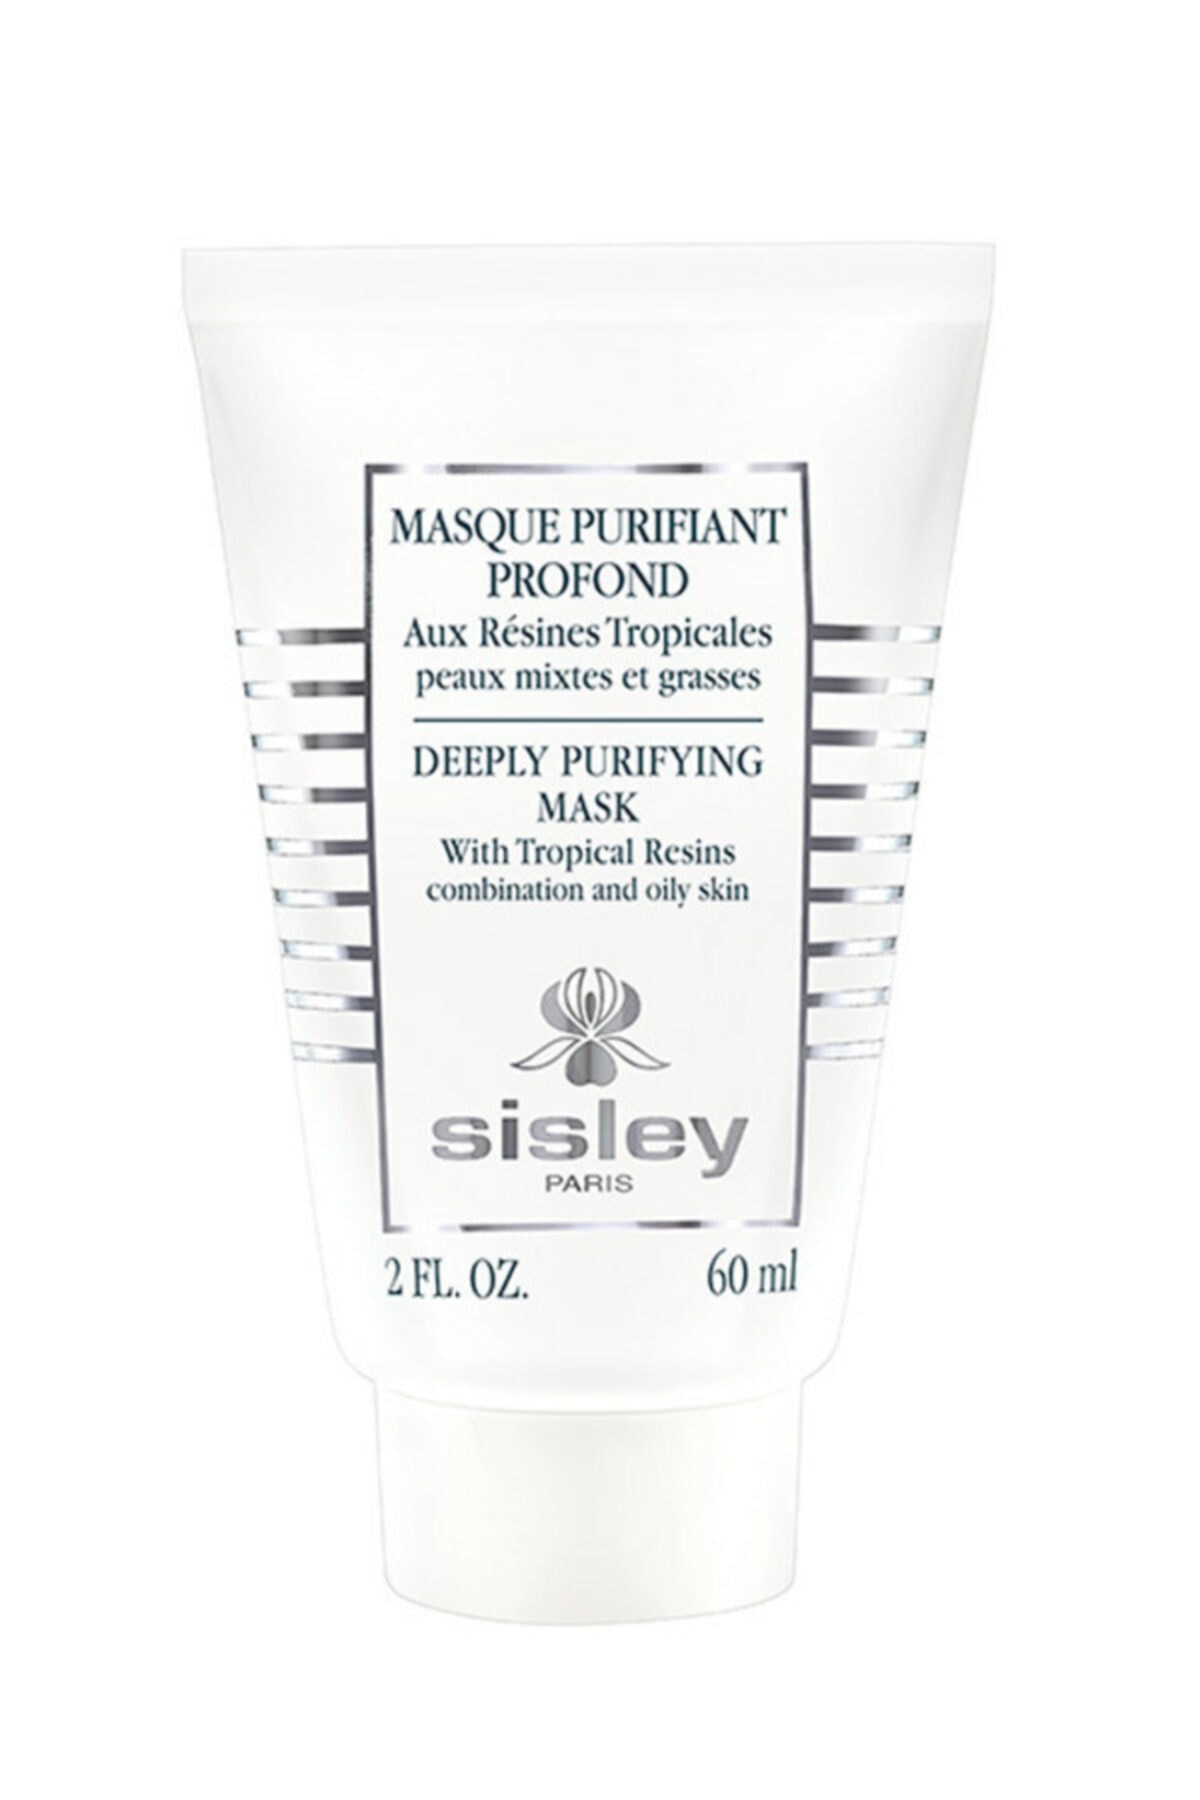 Sisley Masque Purifiant Profond 60 ml.